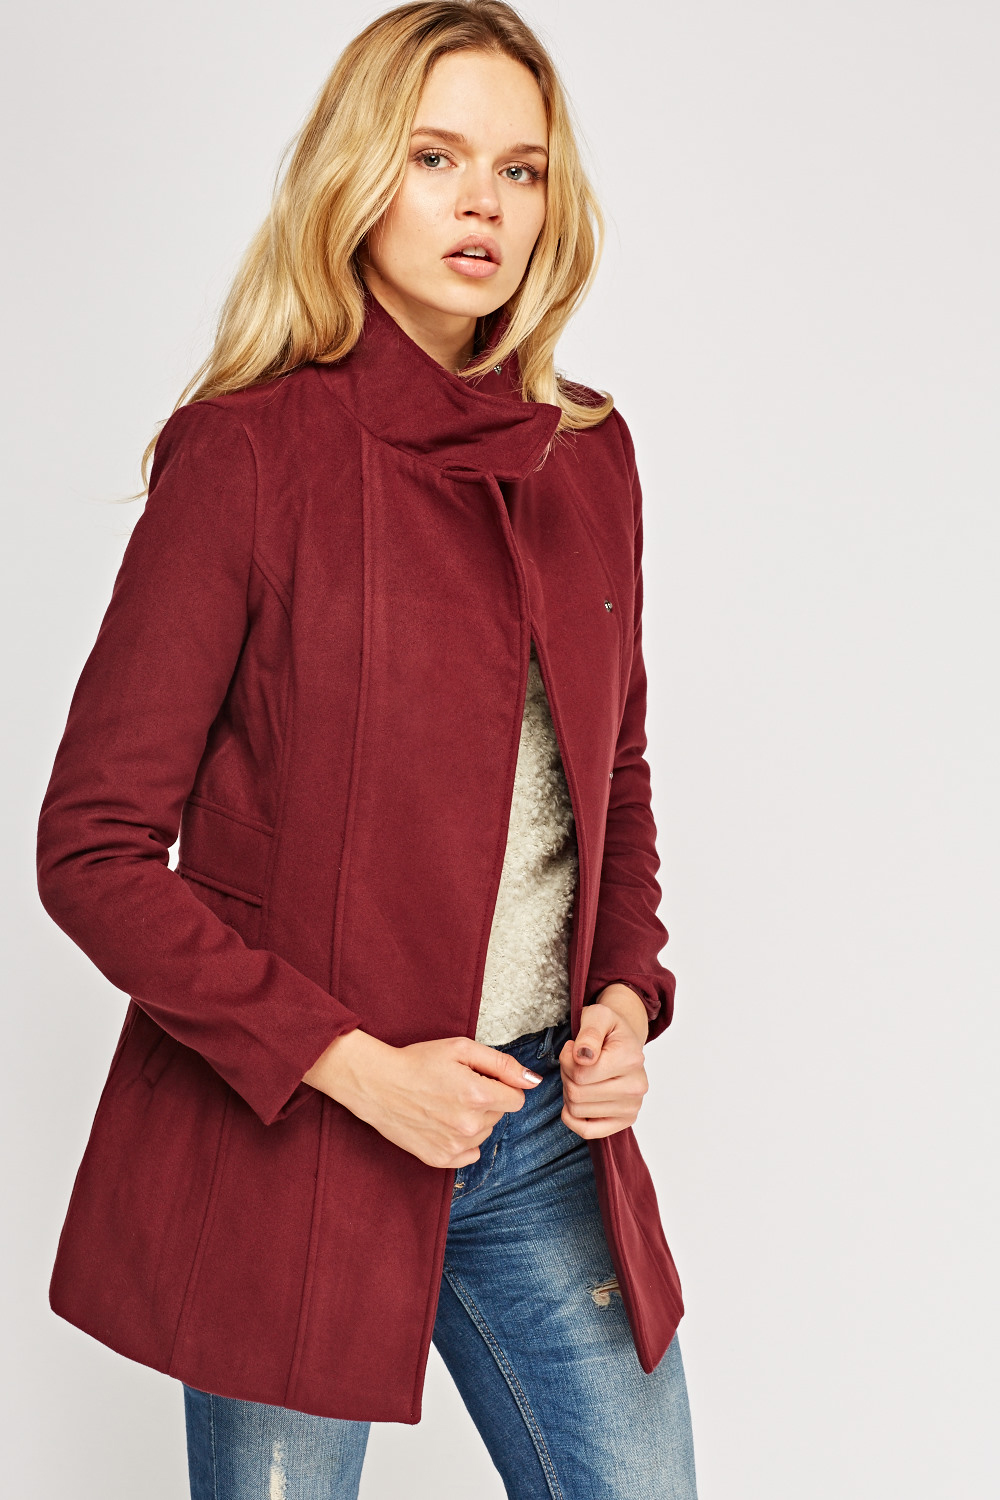 burgundy wool coat